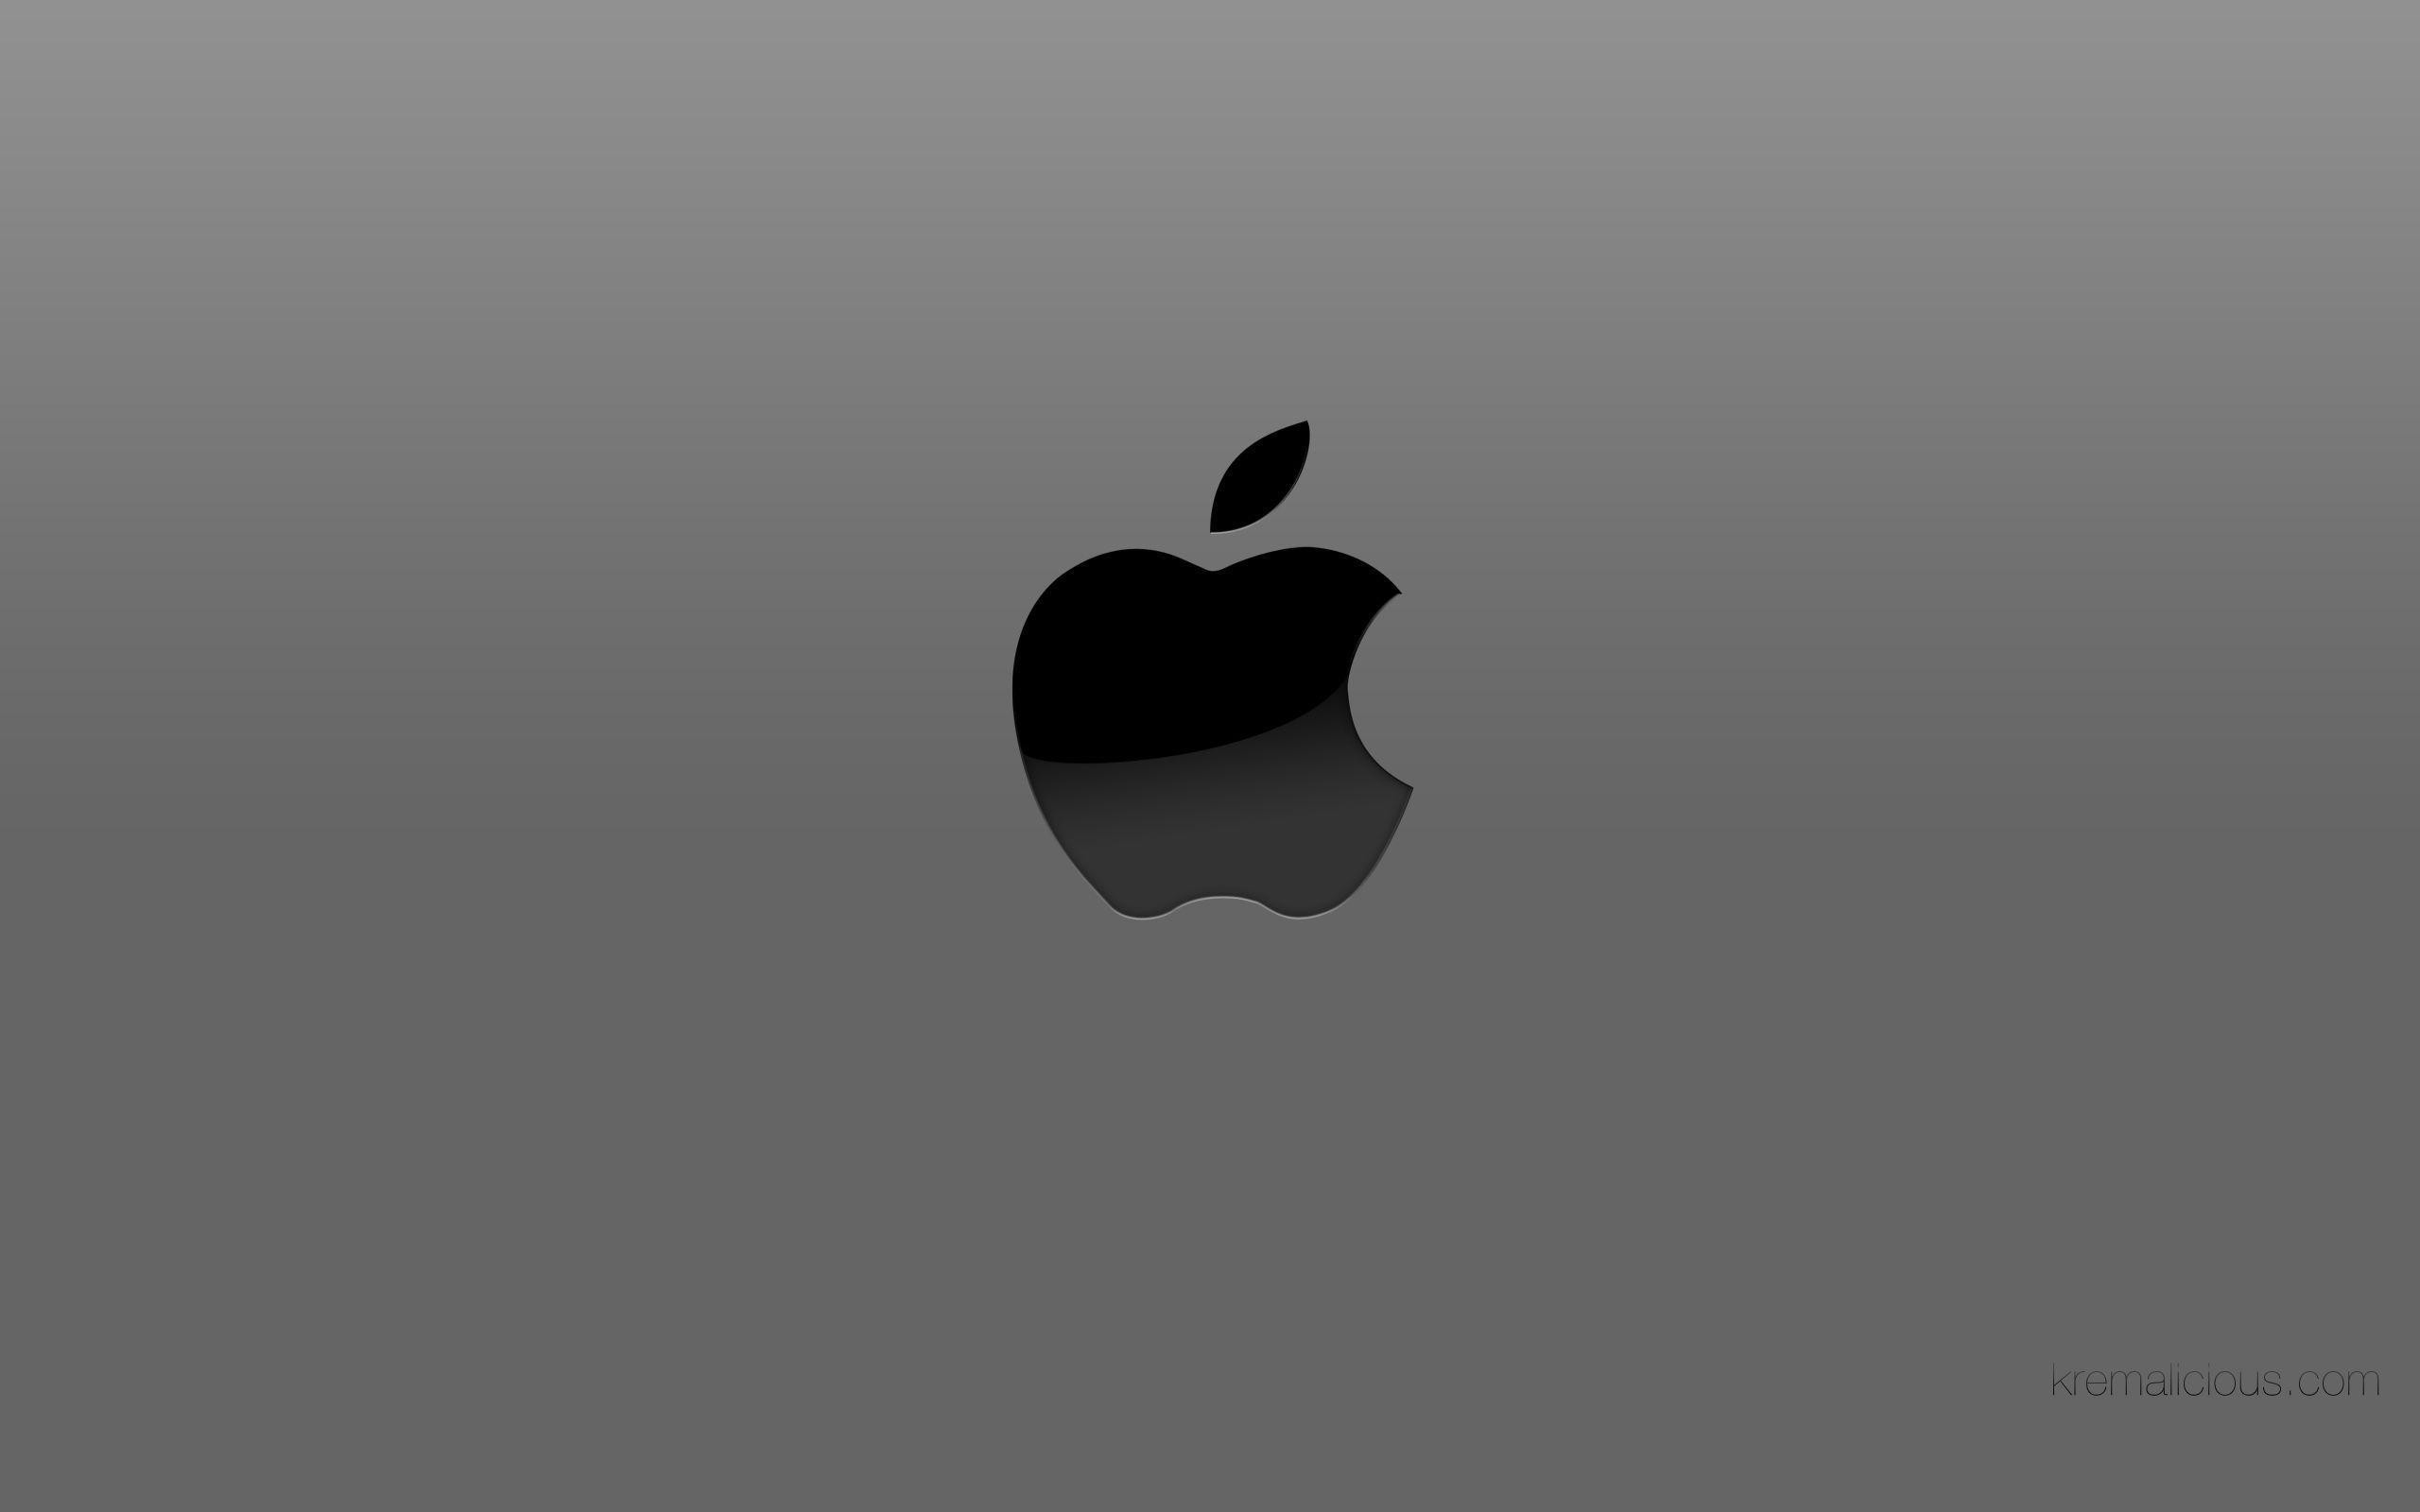 Cool Apple Logo Wallpapers 2 Data-src /w/full/a/8/4/512730 - Apple Logo  Background Hd - 2560x1600 Wallpaper 